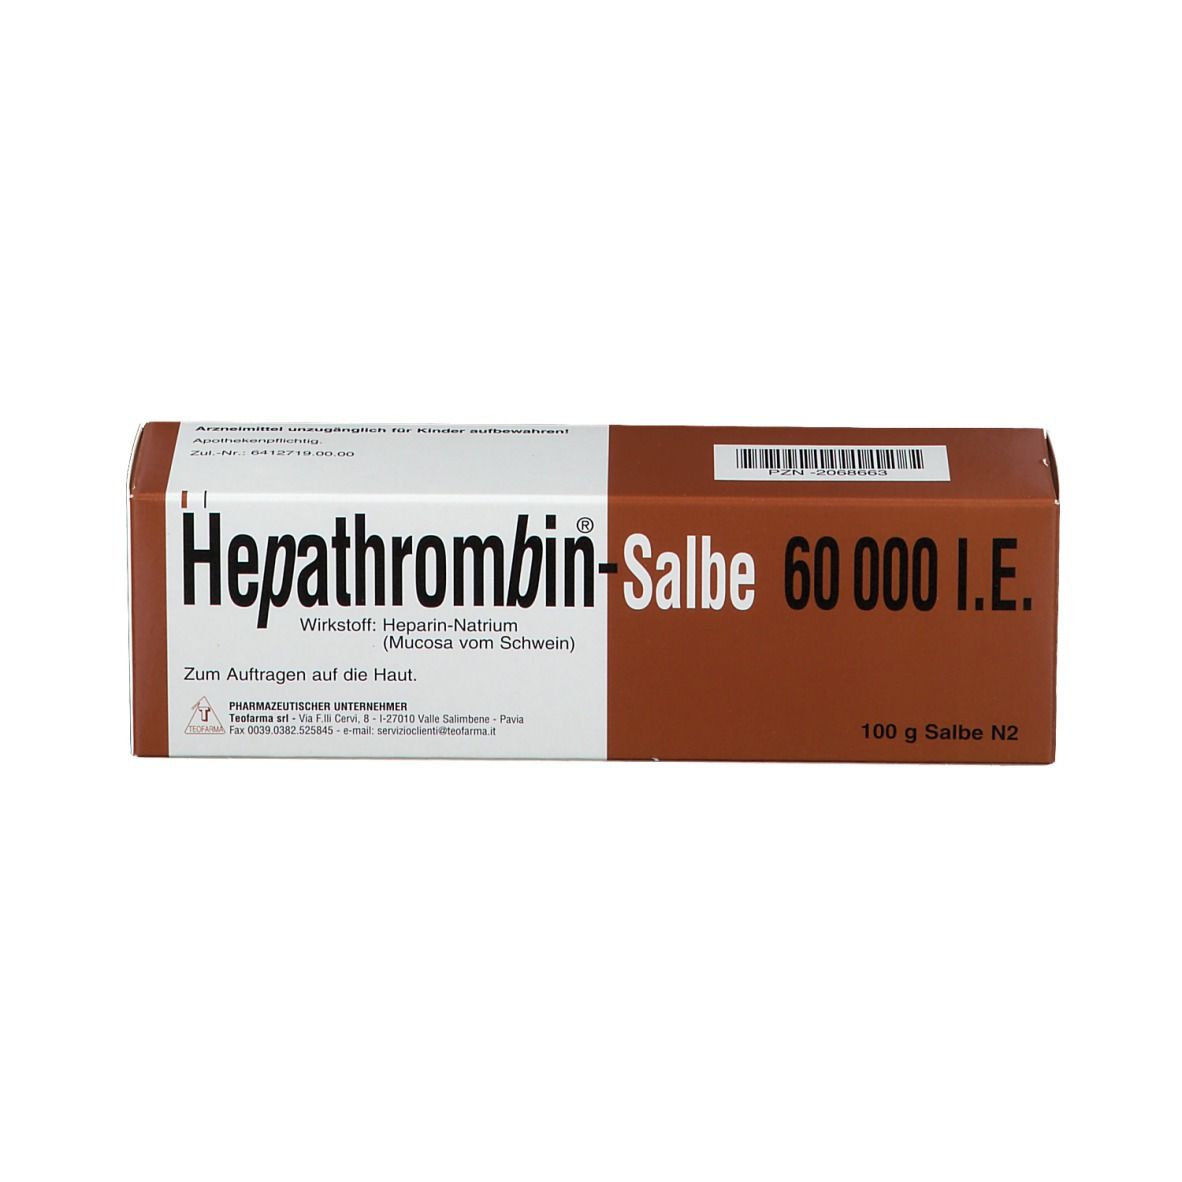 Hepathrombin®-Salbe 60 000 I.E.